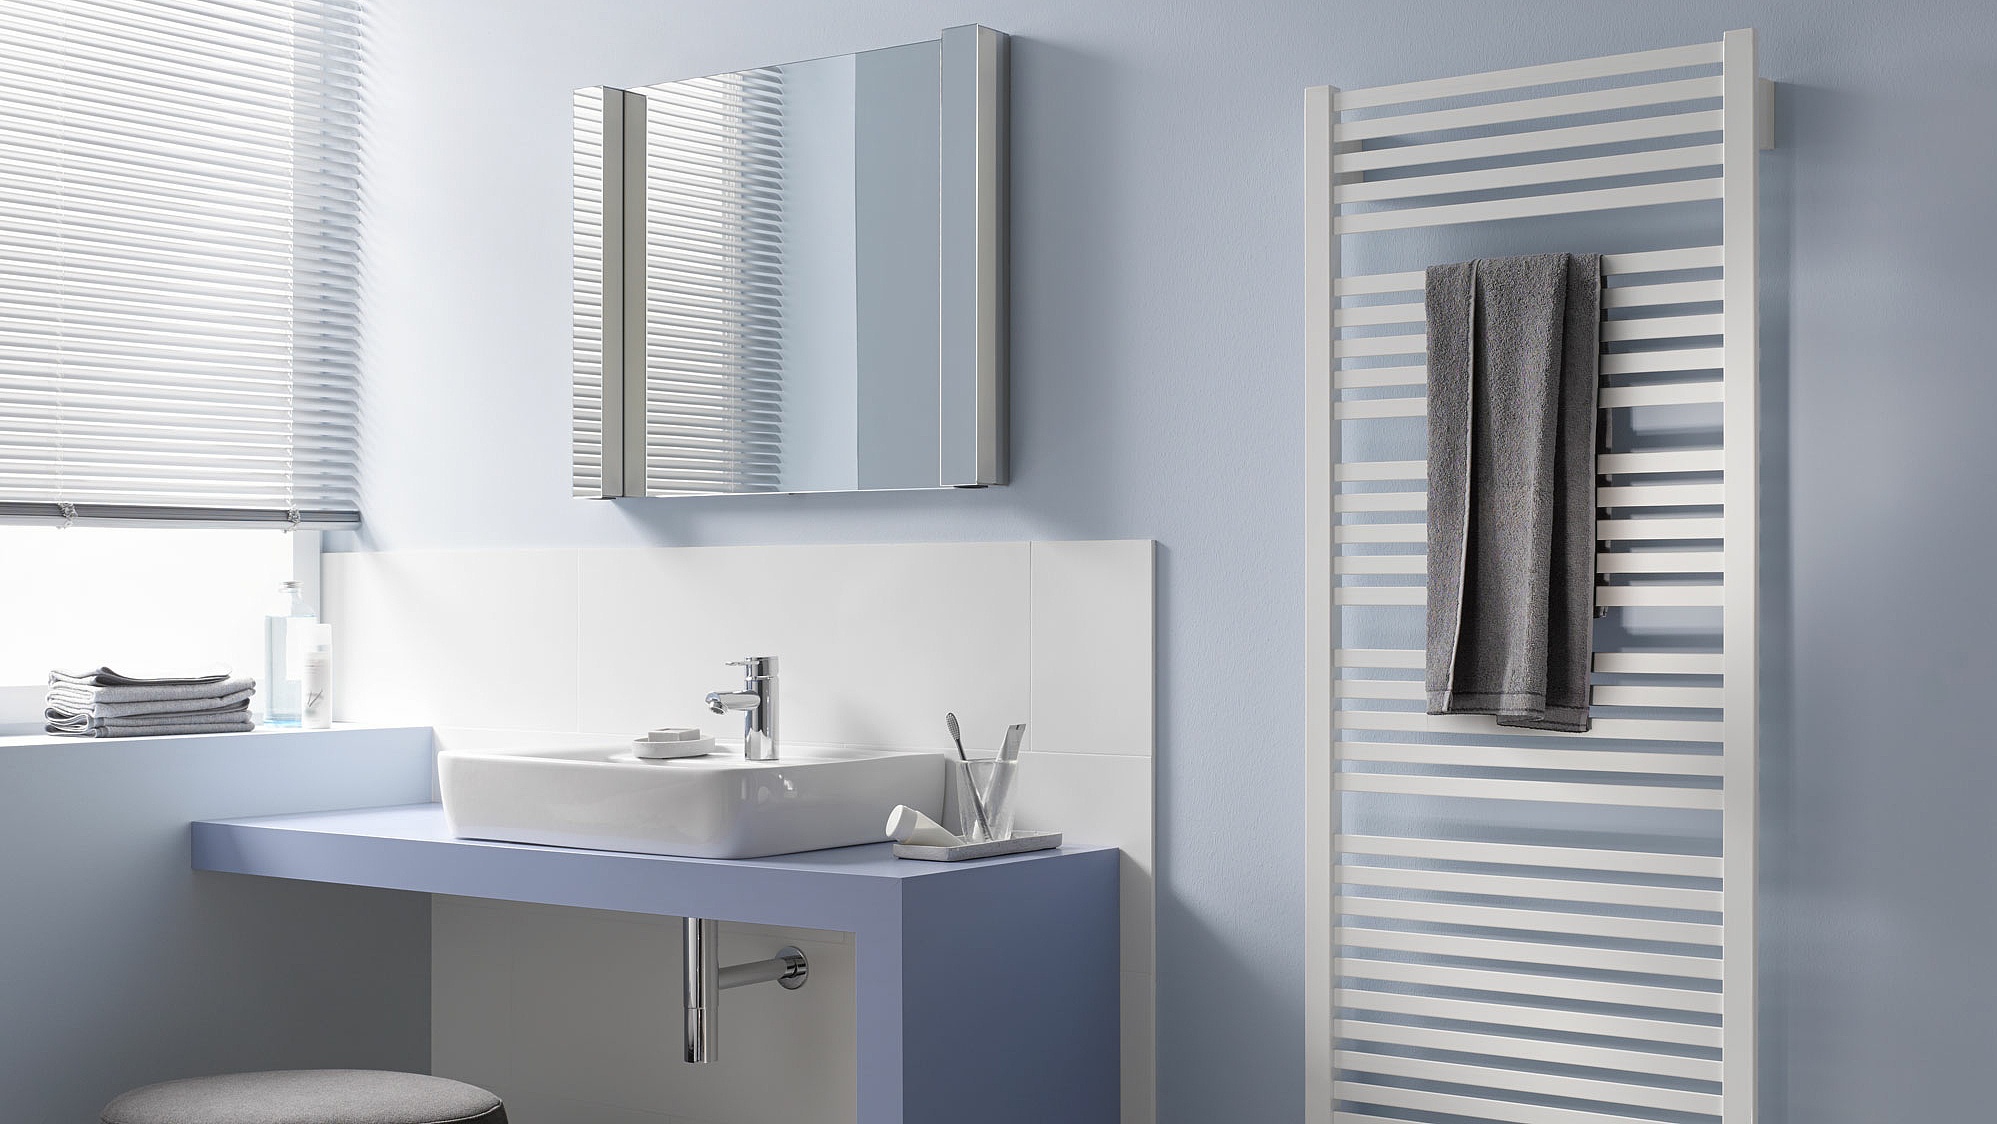 Kermi Credo quadris design and bathroom radiators feature outstanding flexibility during planning and installation.